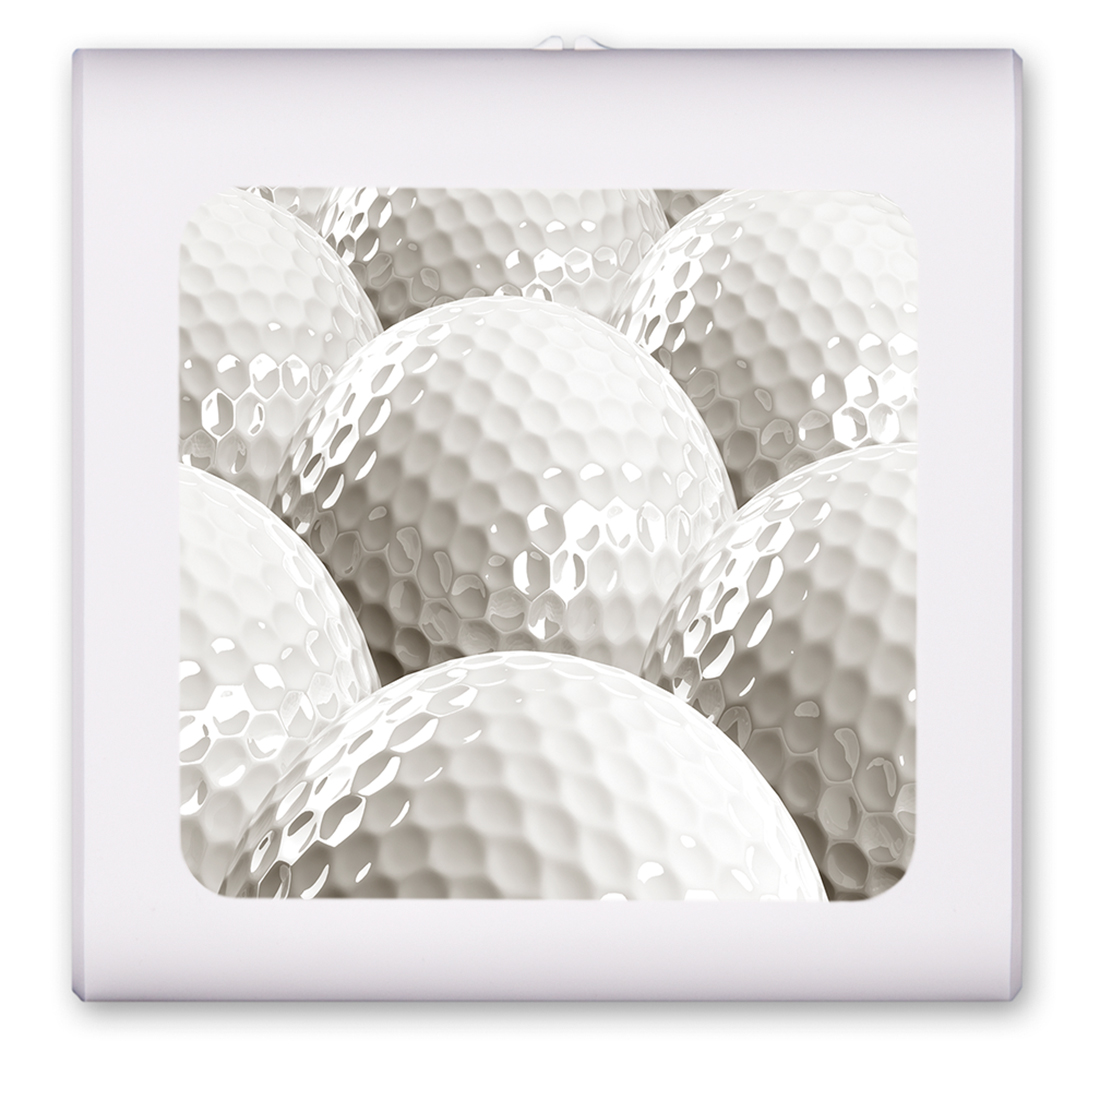 New Golf balls - #972